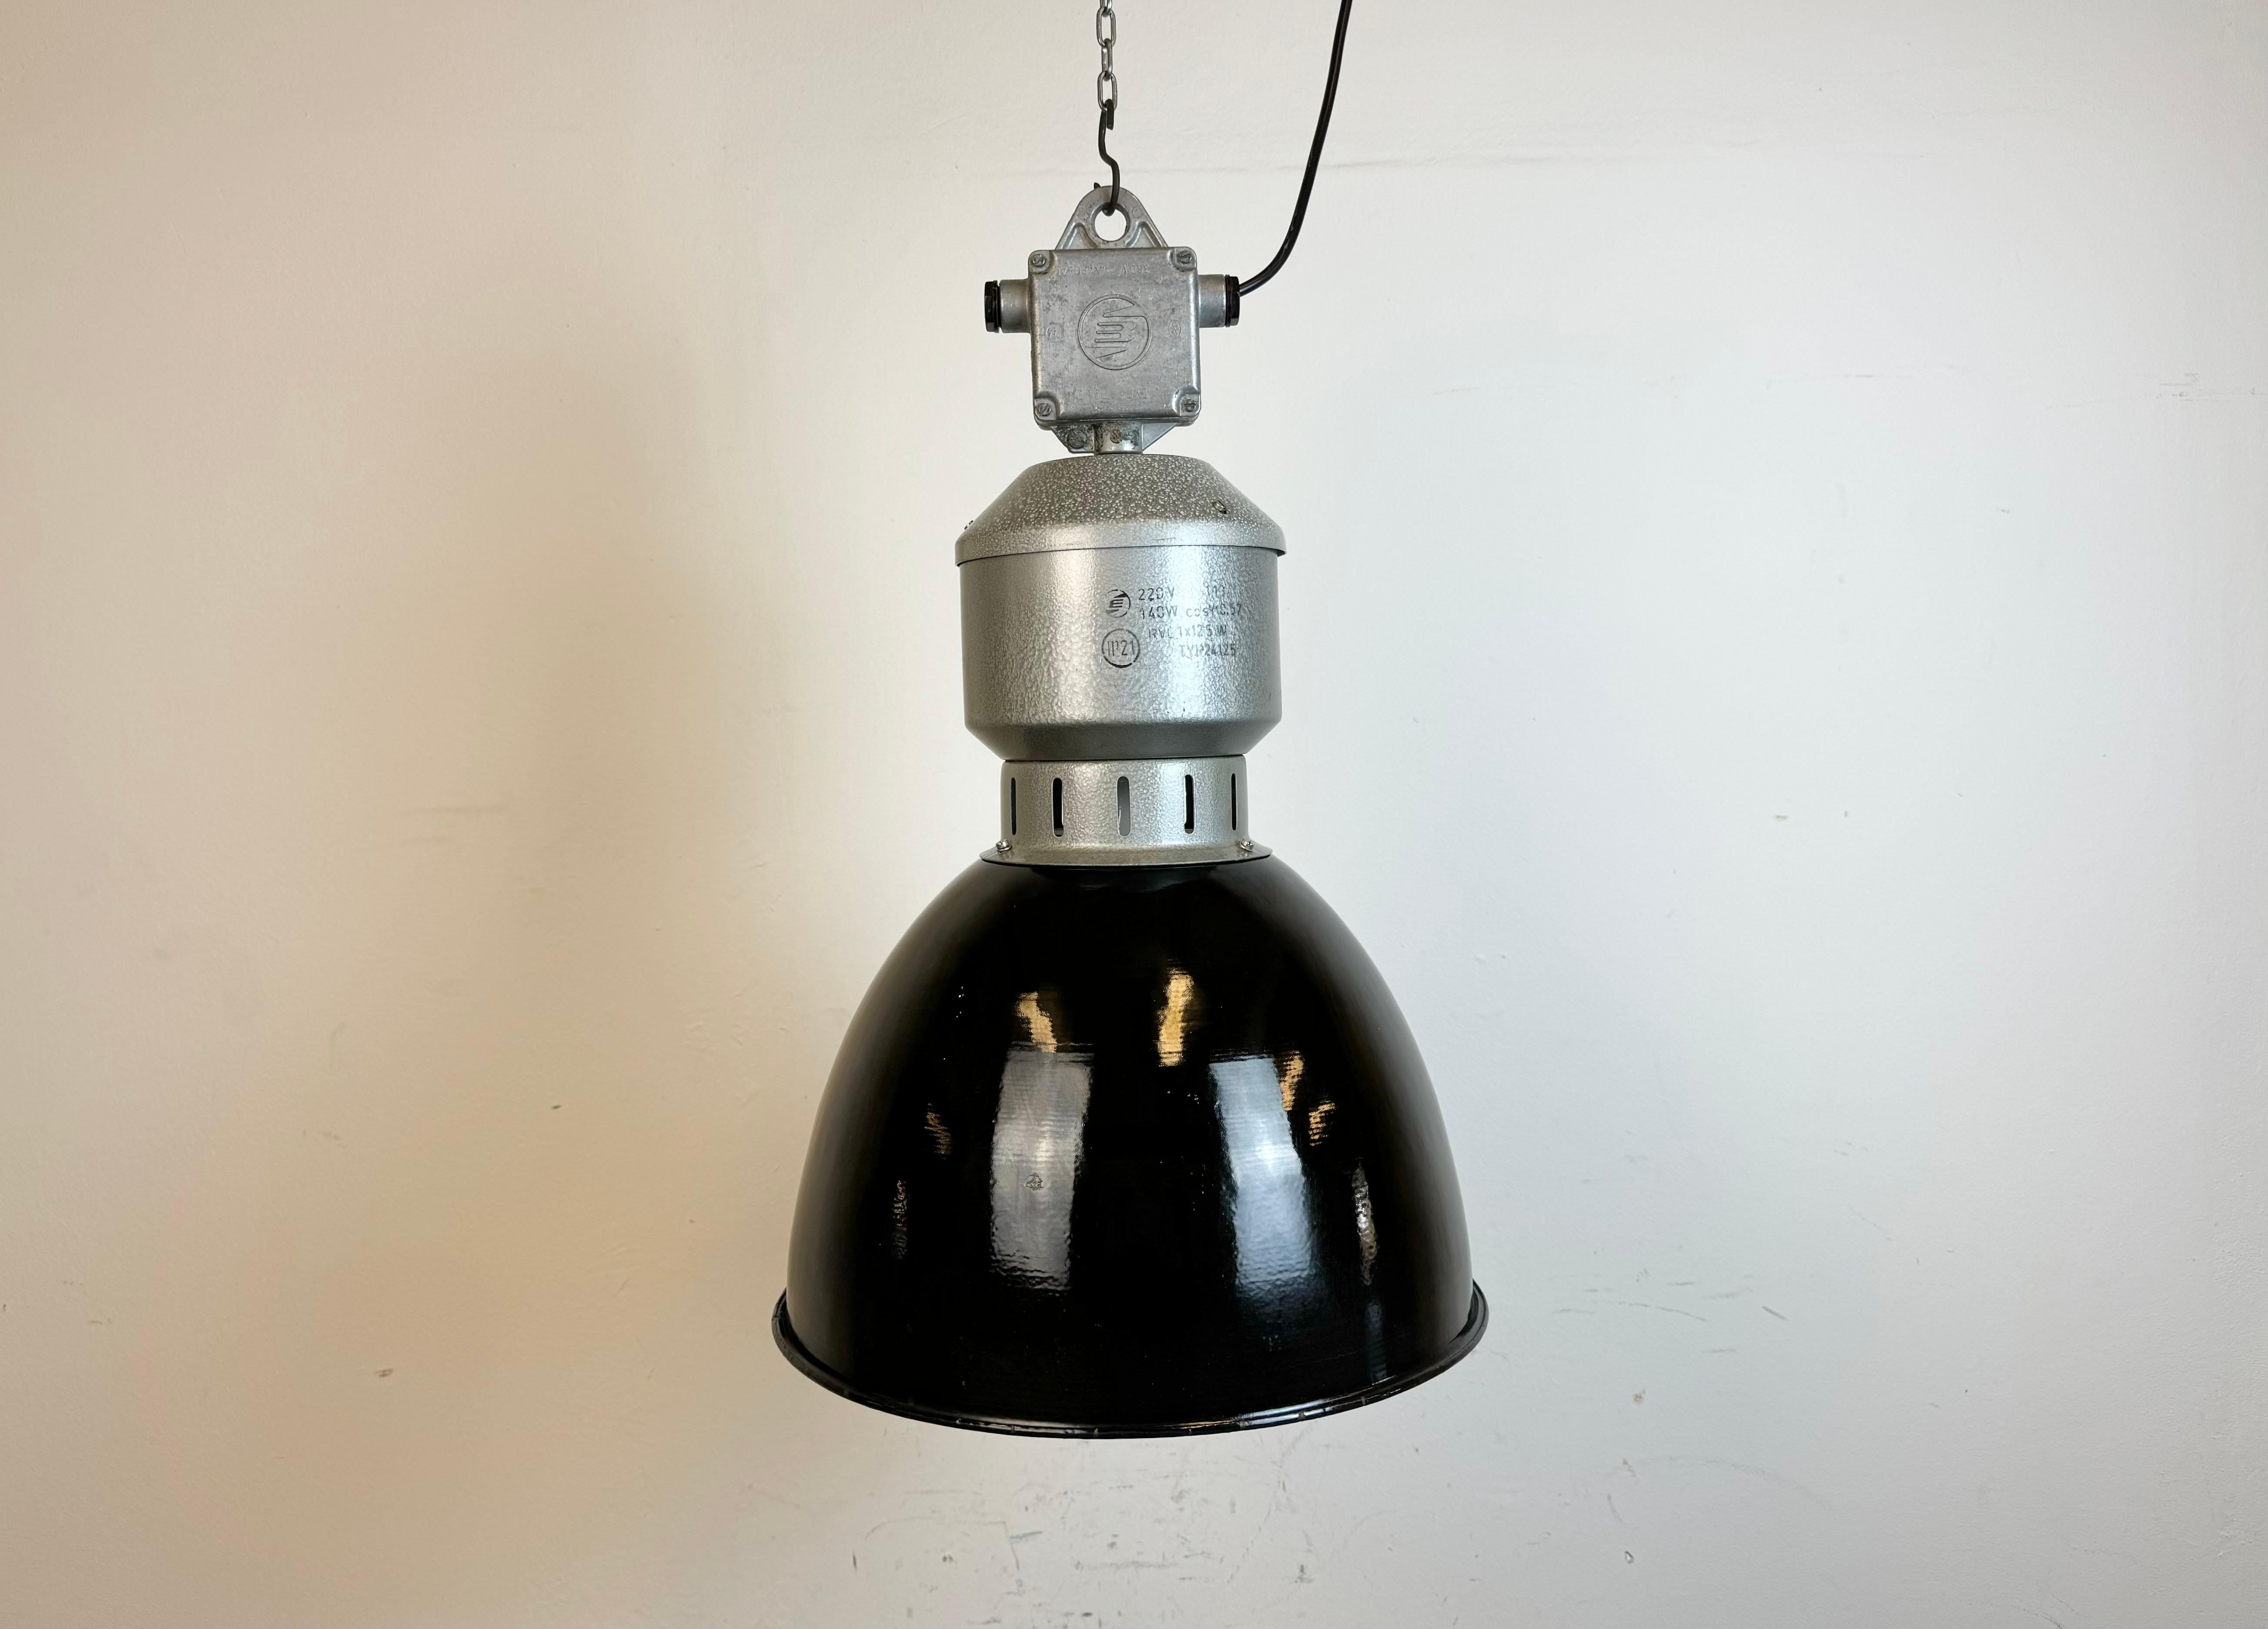 Industrial black enamel pendant light made by Elektrosvit in former Czechoslovakia during the 1960s. White enamel inside the shade. Iron hammerpaint neck with cast aluminium top box. The porcelain socket requires standard E 27/ E26 light bulbs. New